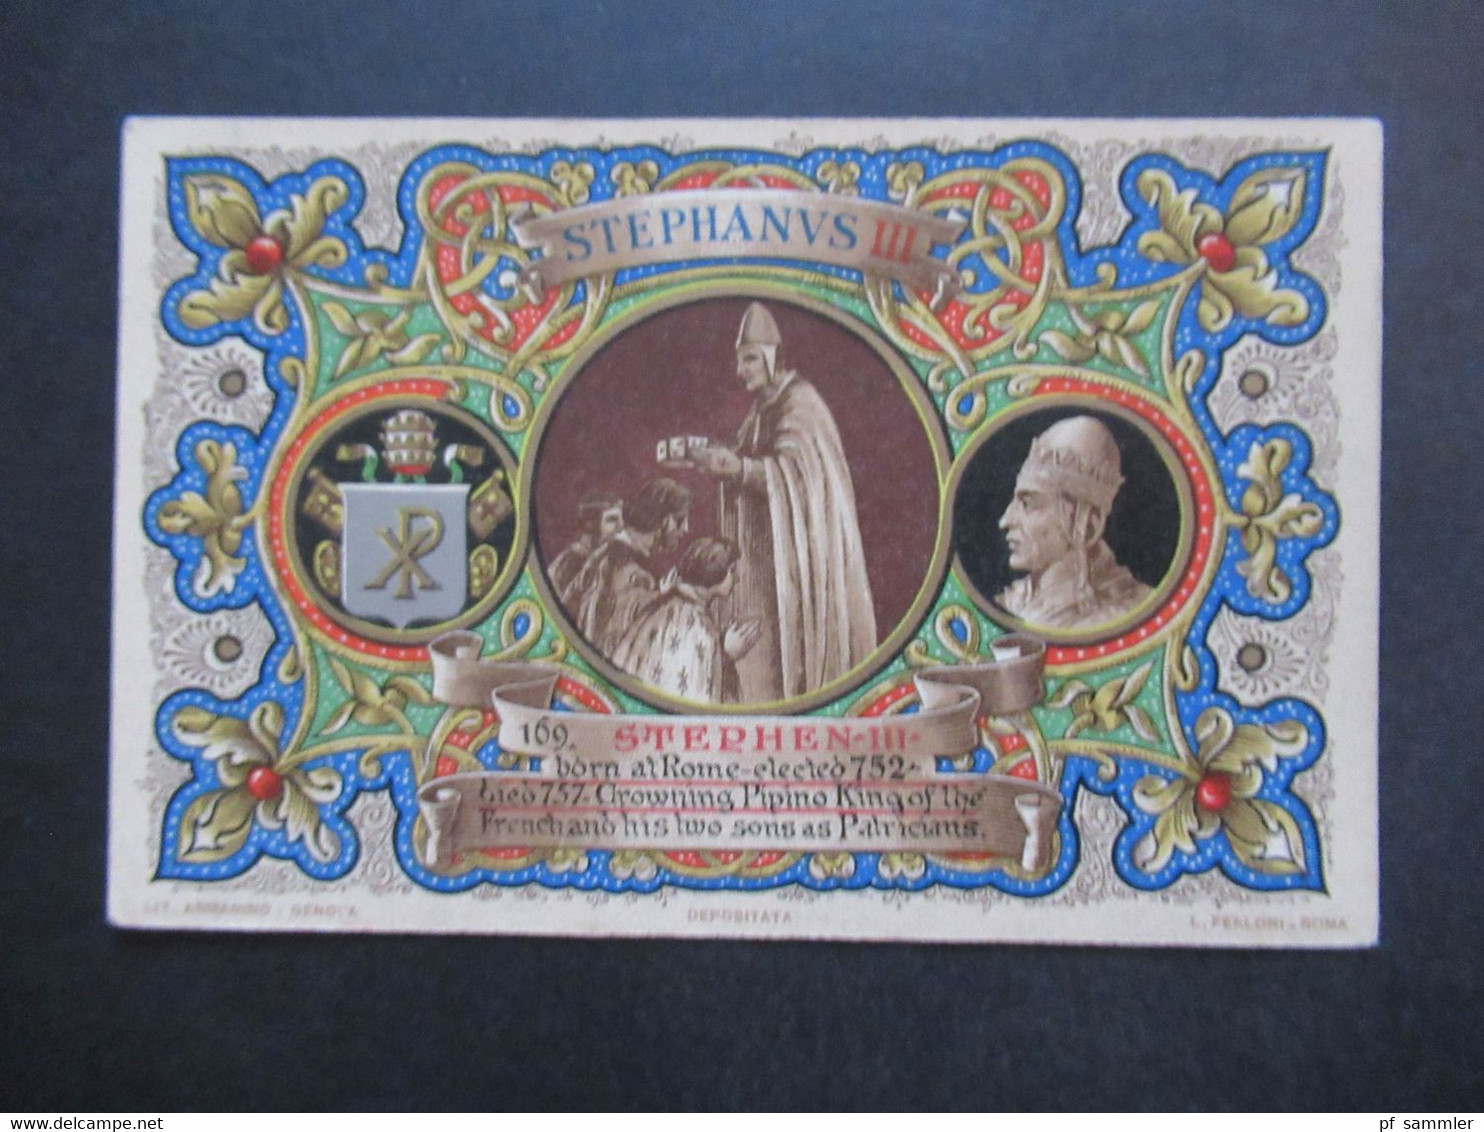 AK Posten 69 Stück Lithografie / Litho um 1903 verschiedene Päpste Relgion / Vatican tolle Motive Hoher Wert!! 1x Perfin